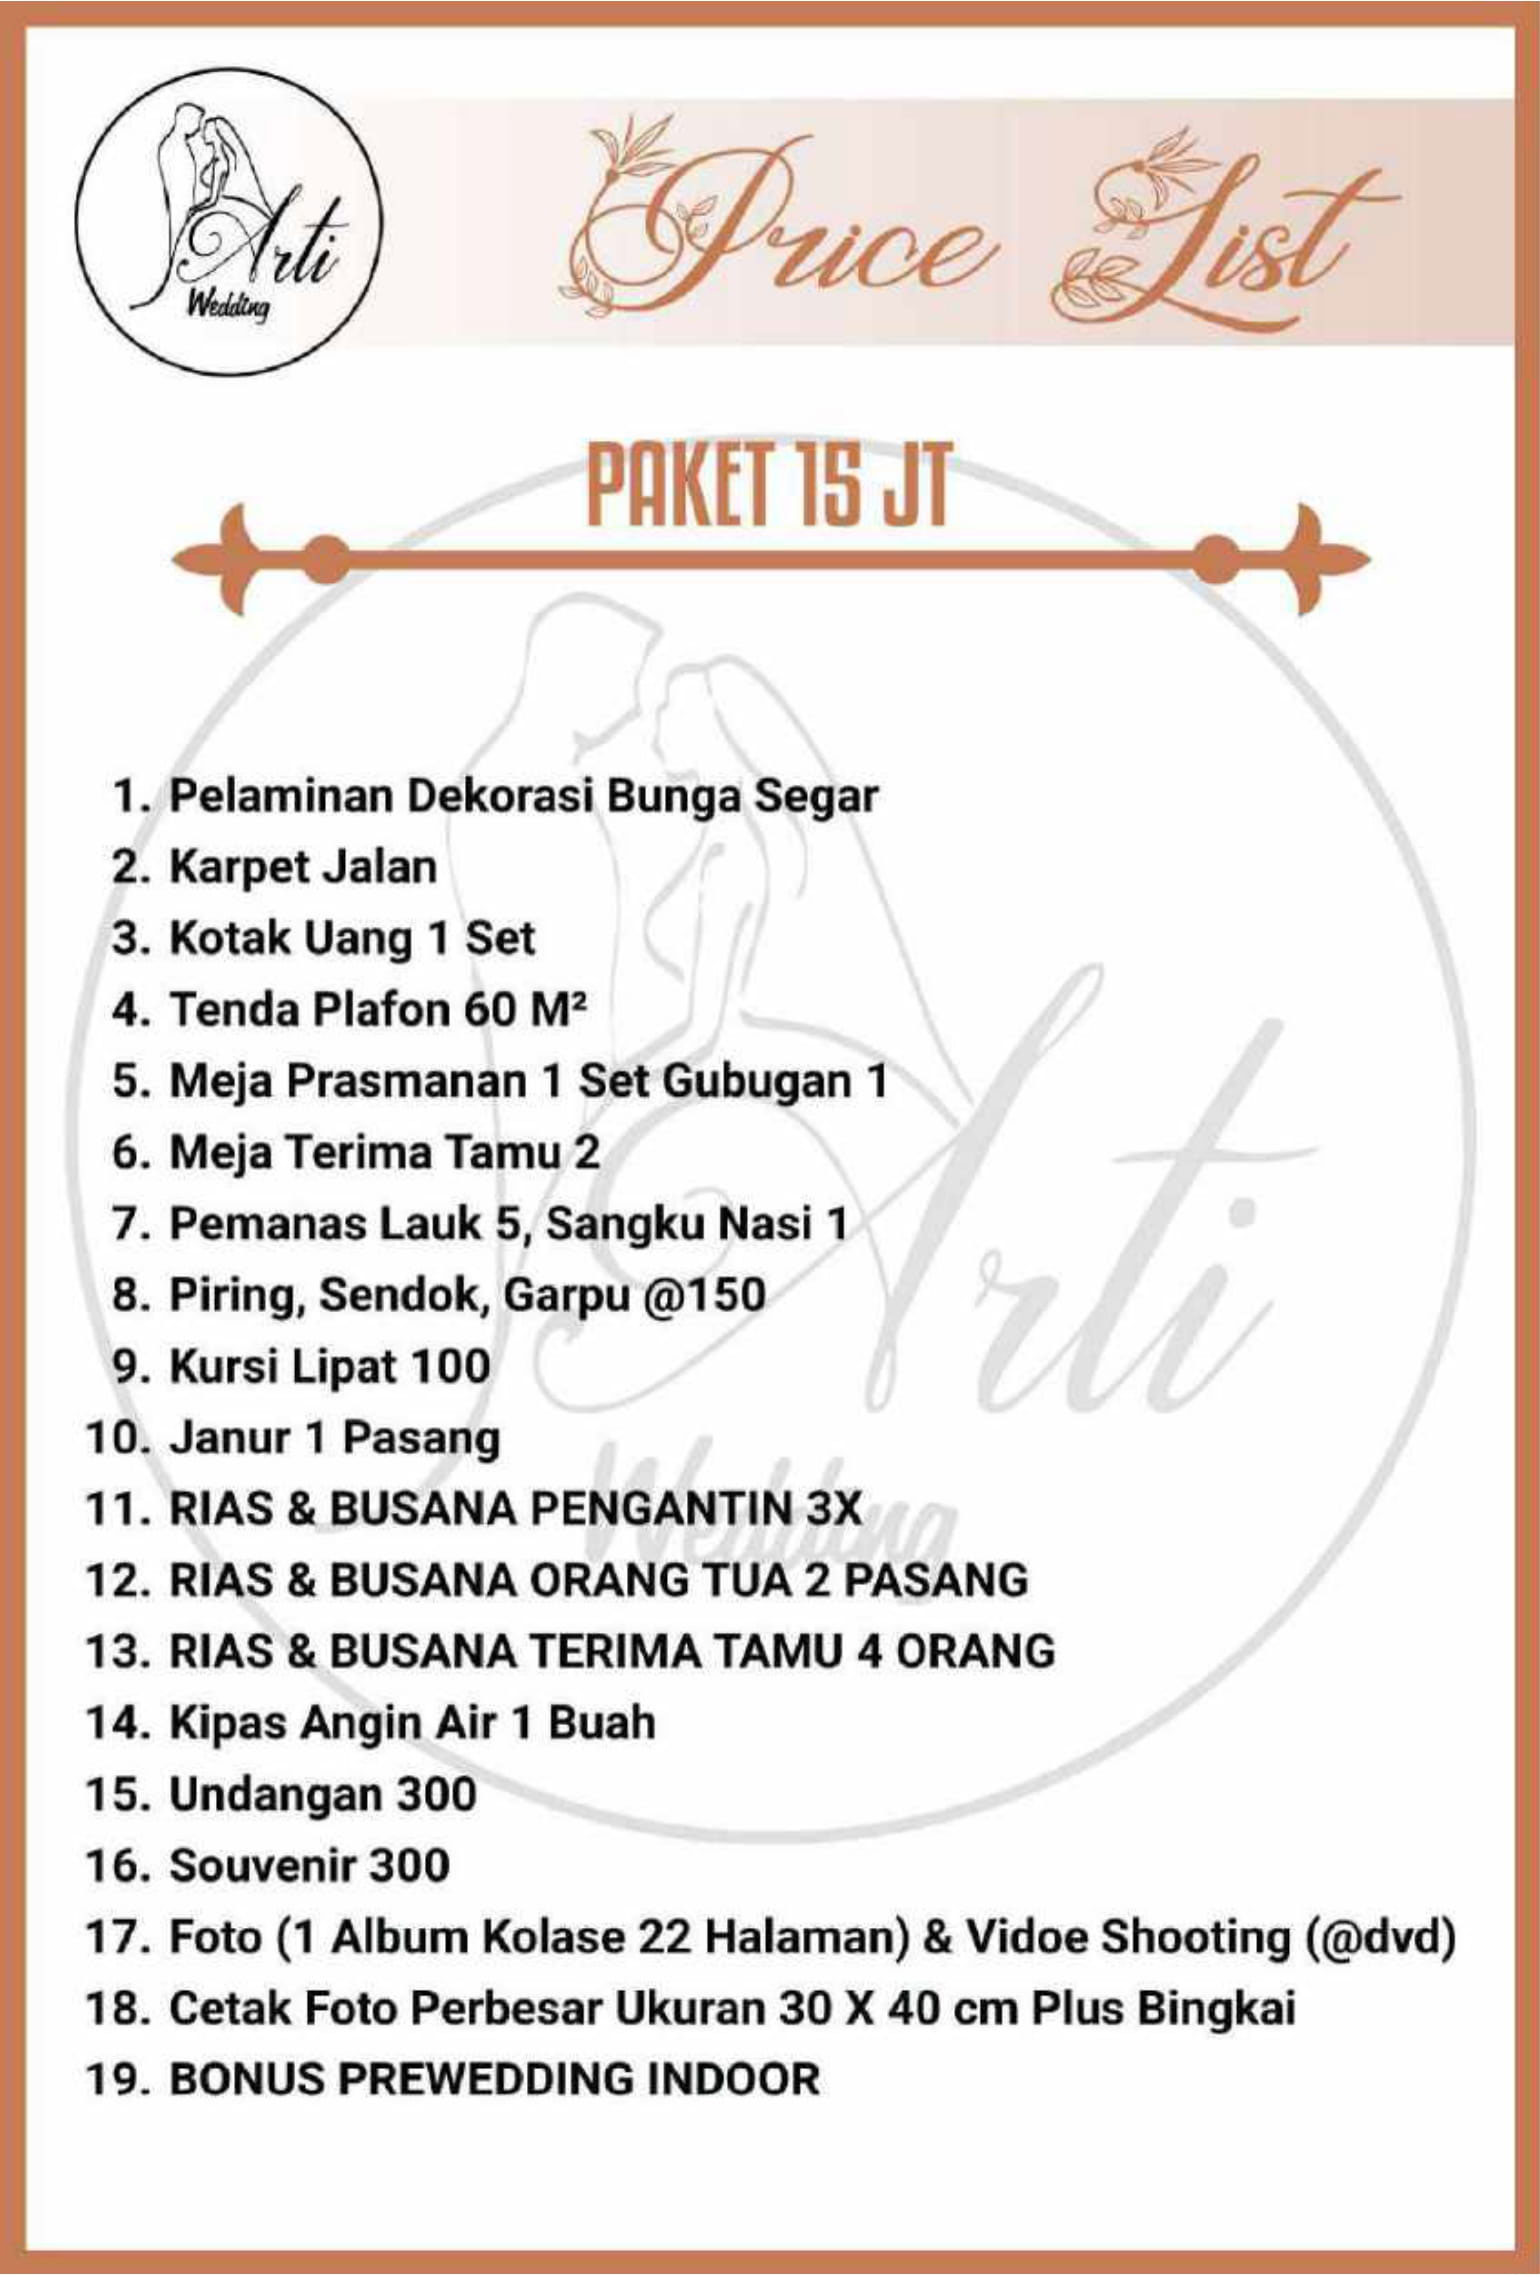 Wedding Organizer Jakarta | Tersedia Paket Murah 15Jt!